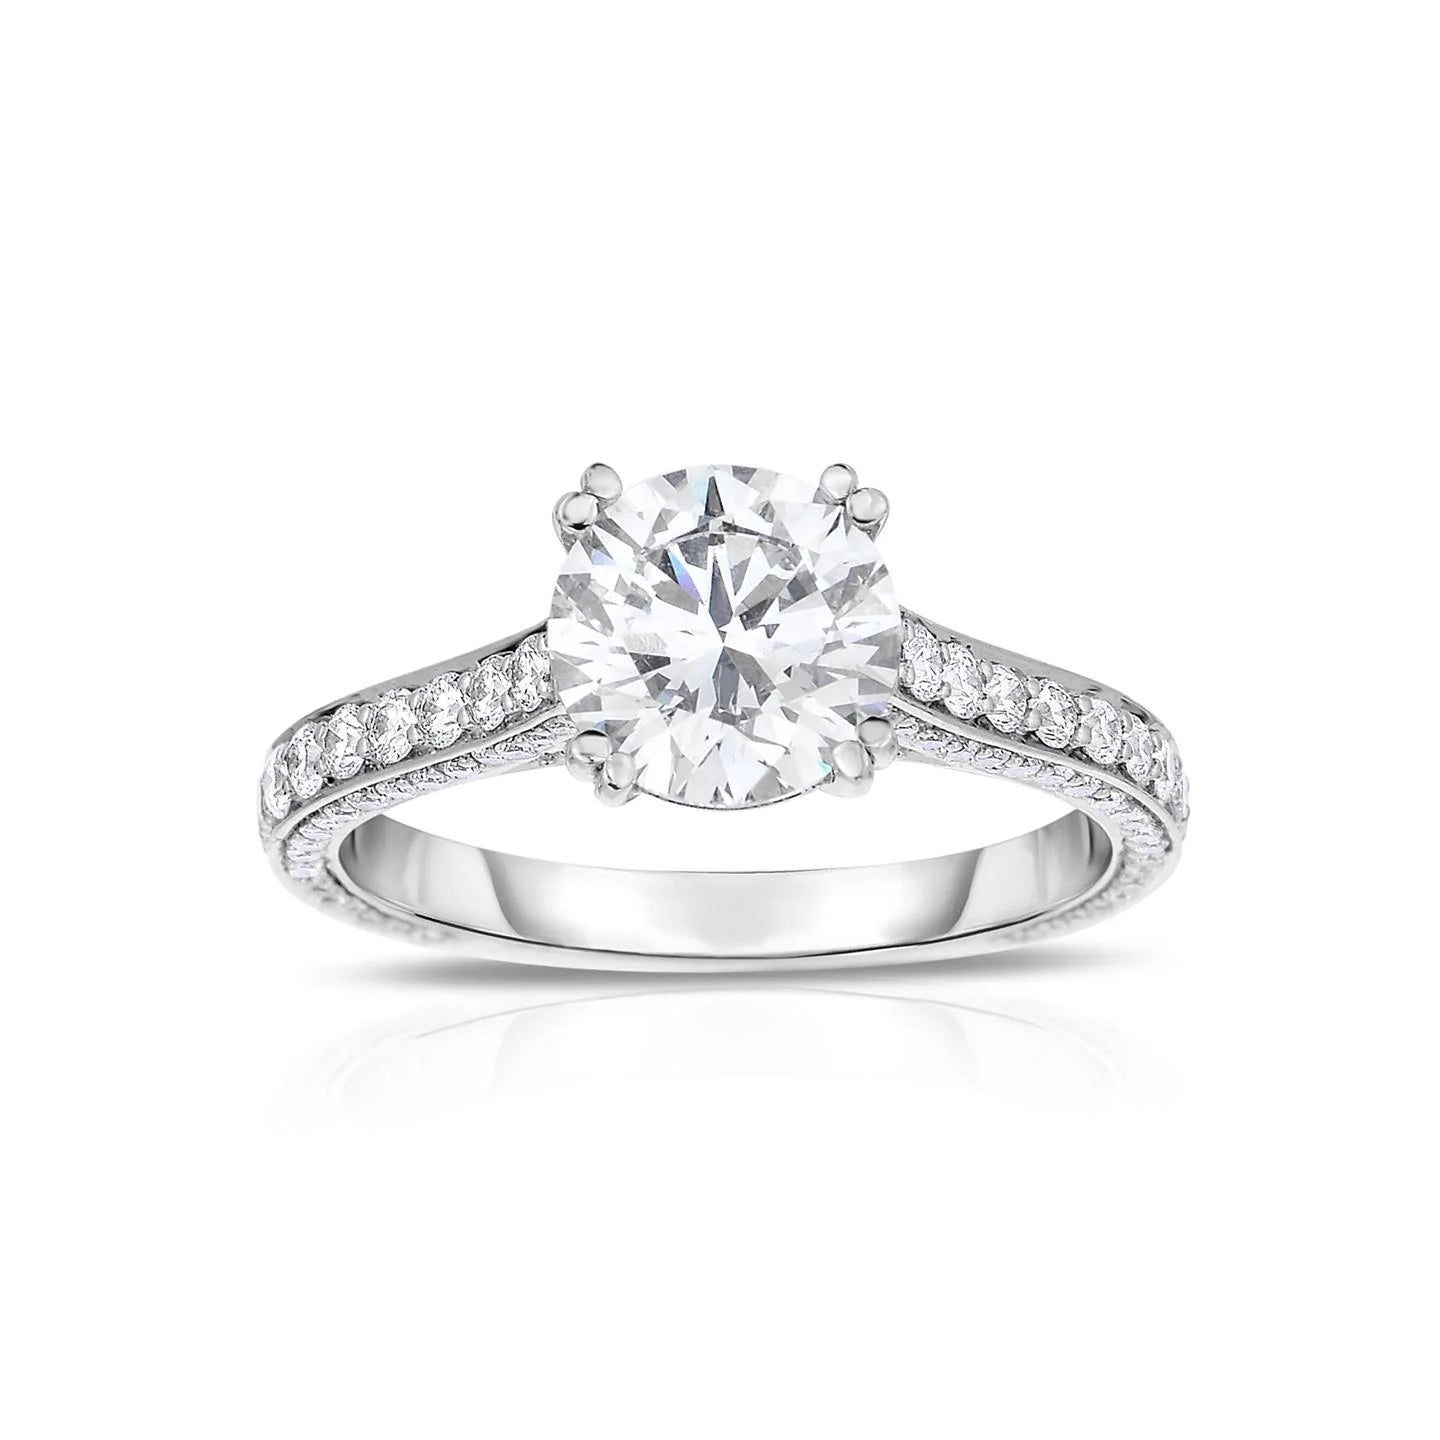 Sparkling Round Cut 3.75 Carats Real Diamond Anniversary Ring Prong Set